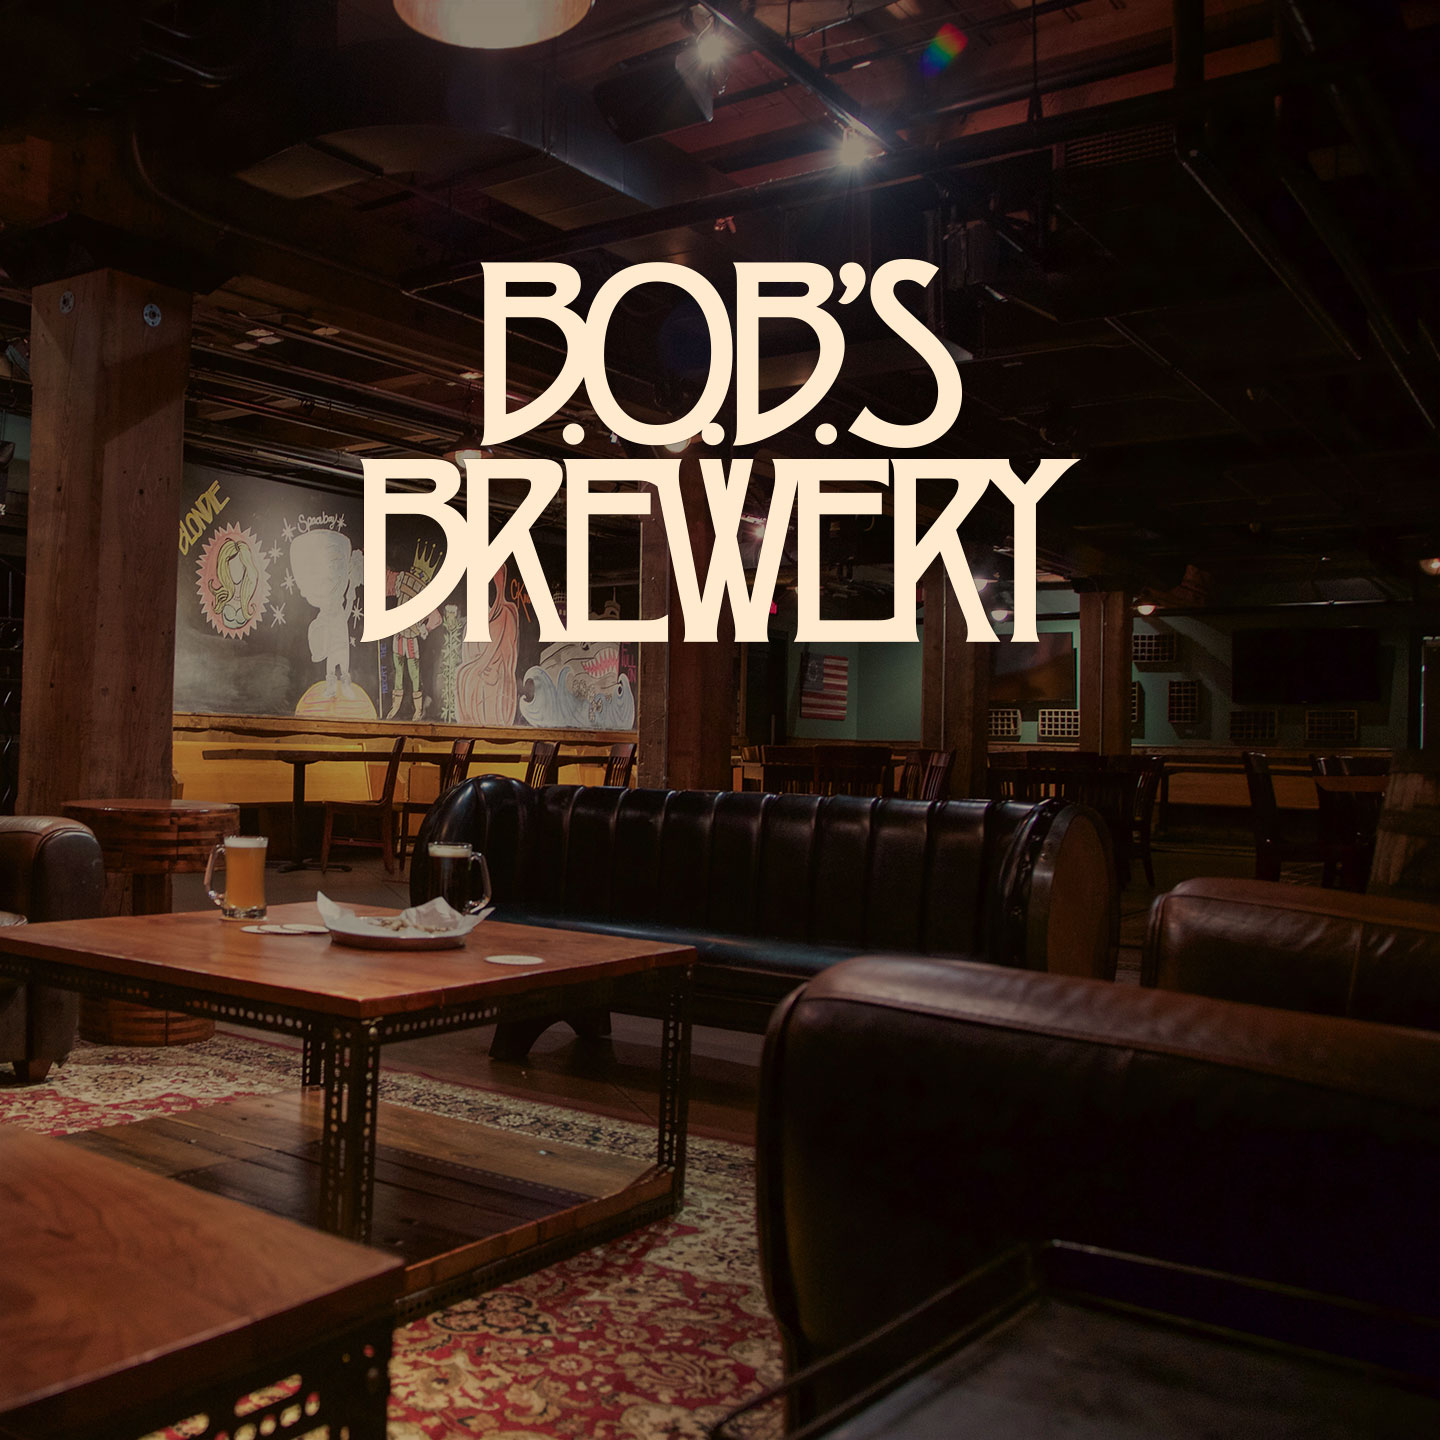 BOB's Brewery